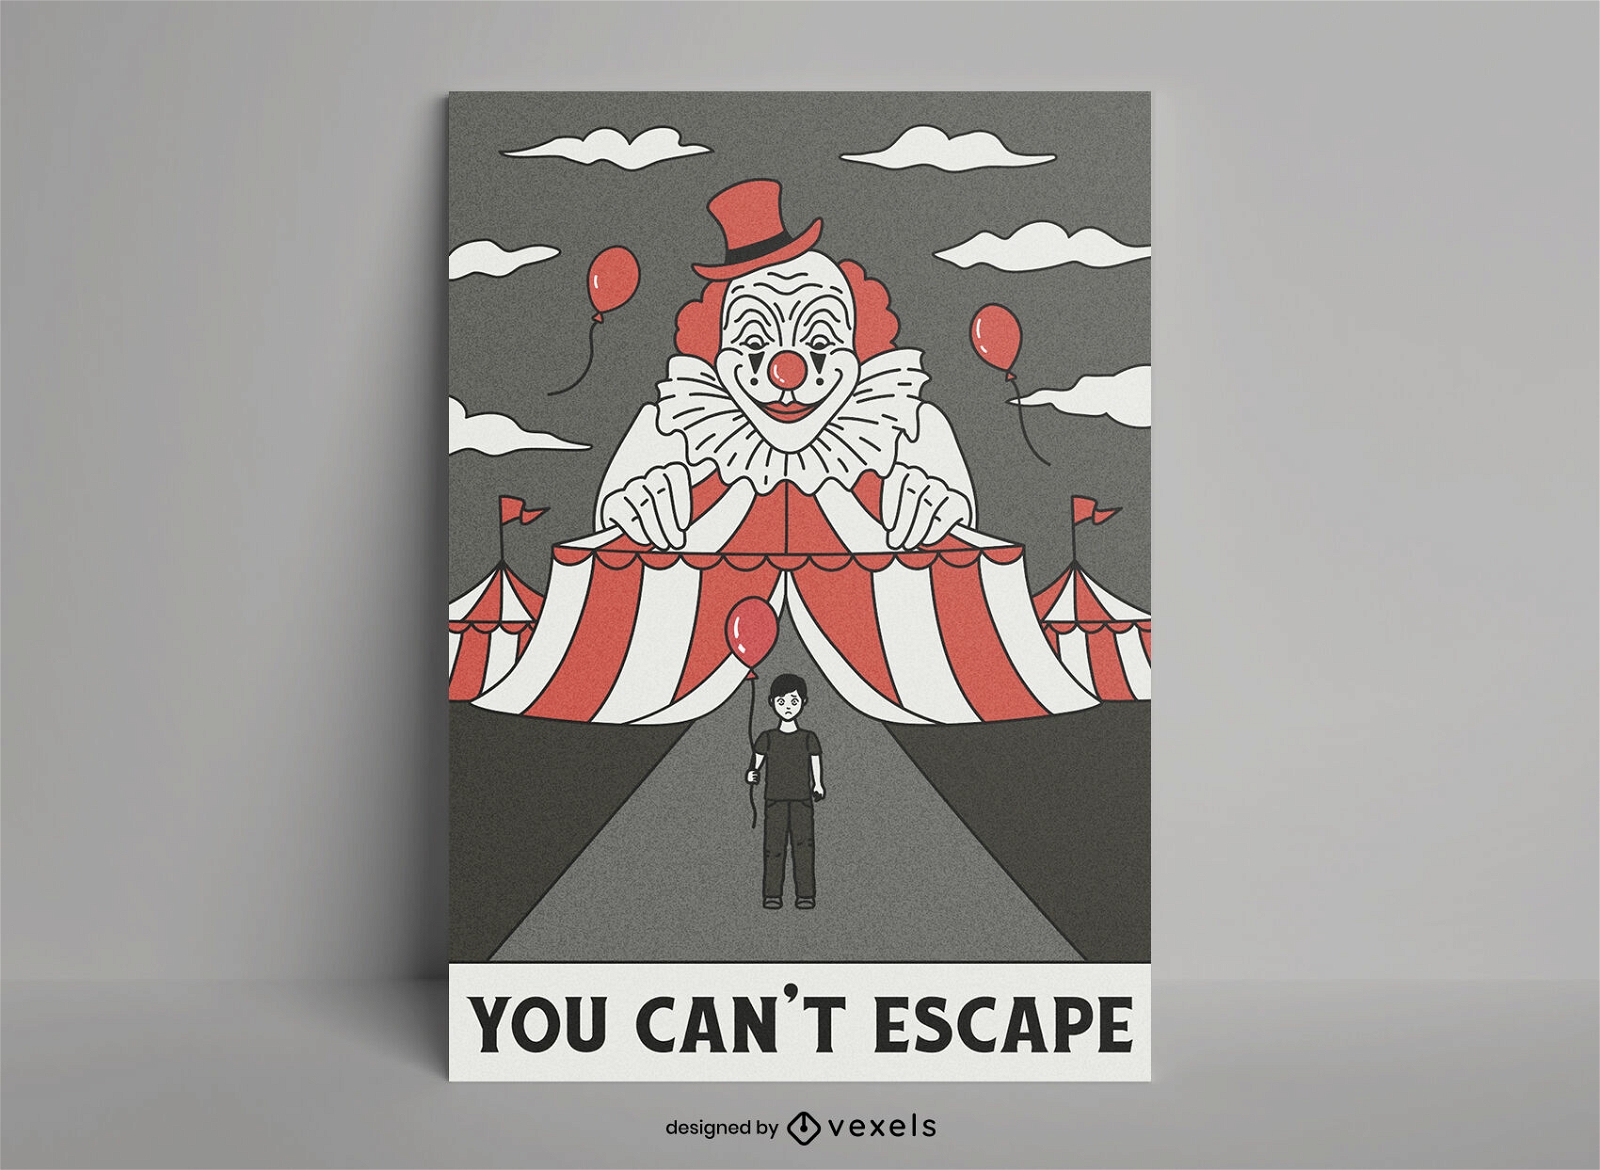 Killer clown circus scary poster template